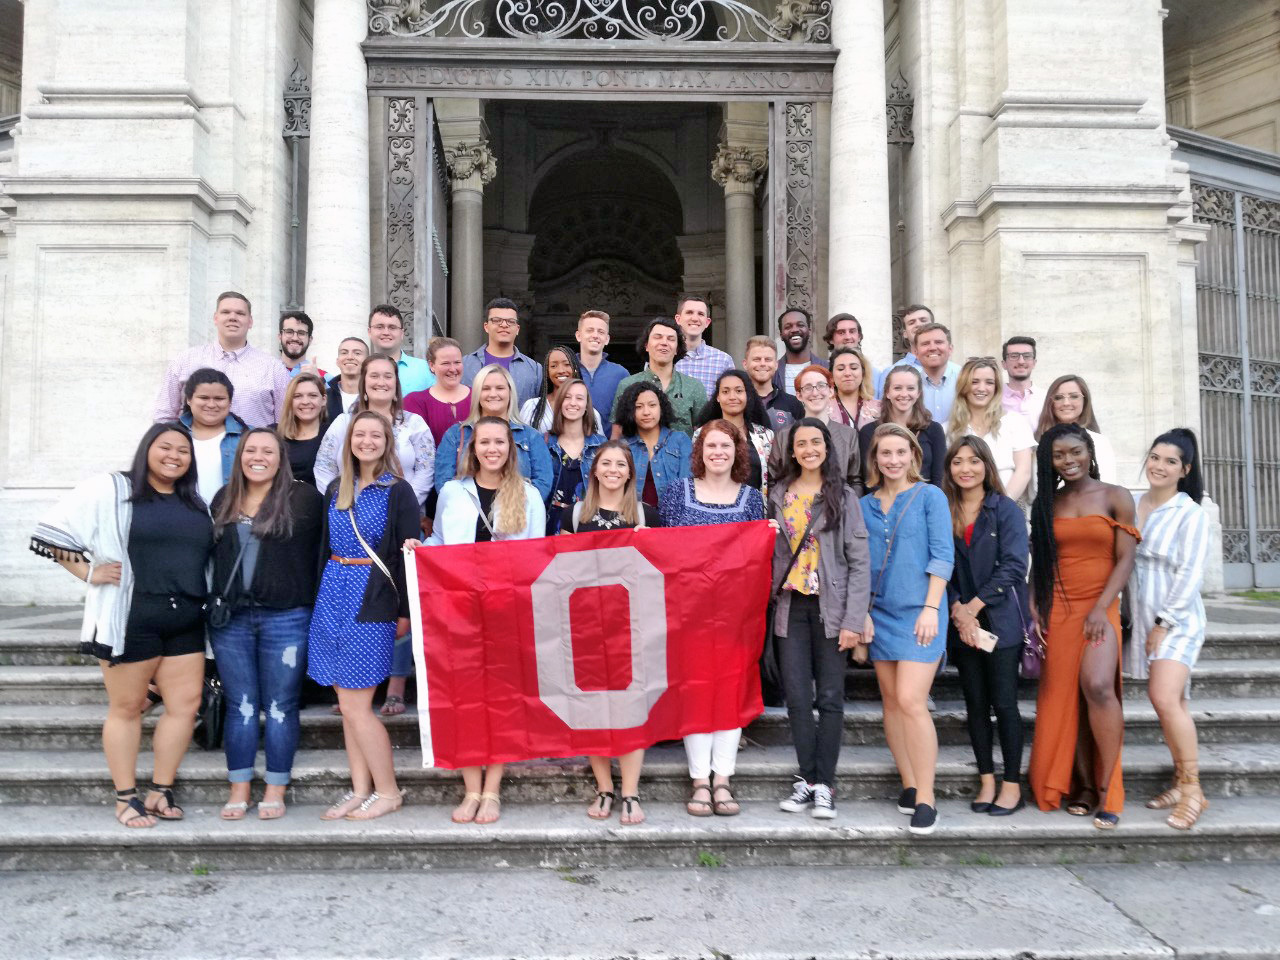 Osu alumni in Europe posing with an OSU flag